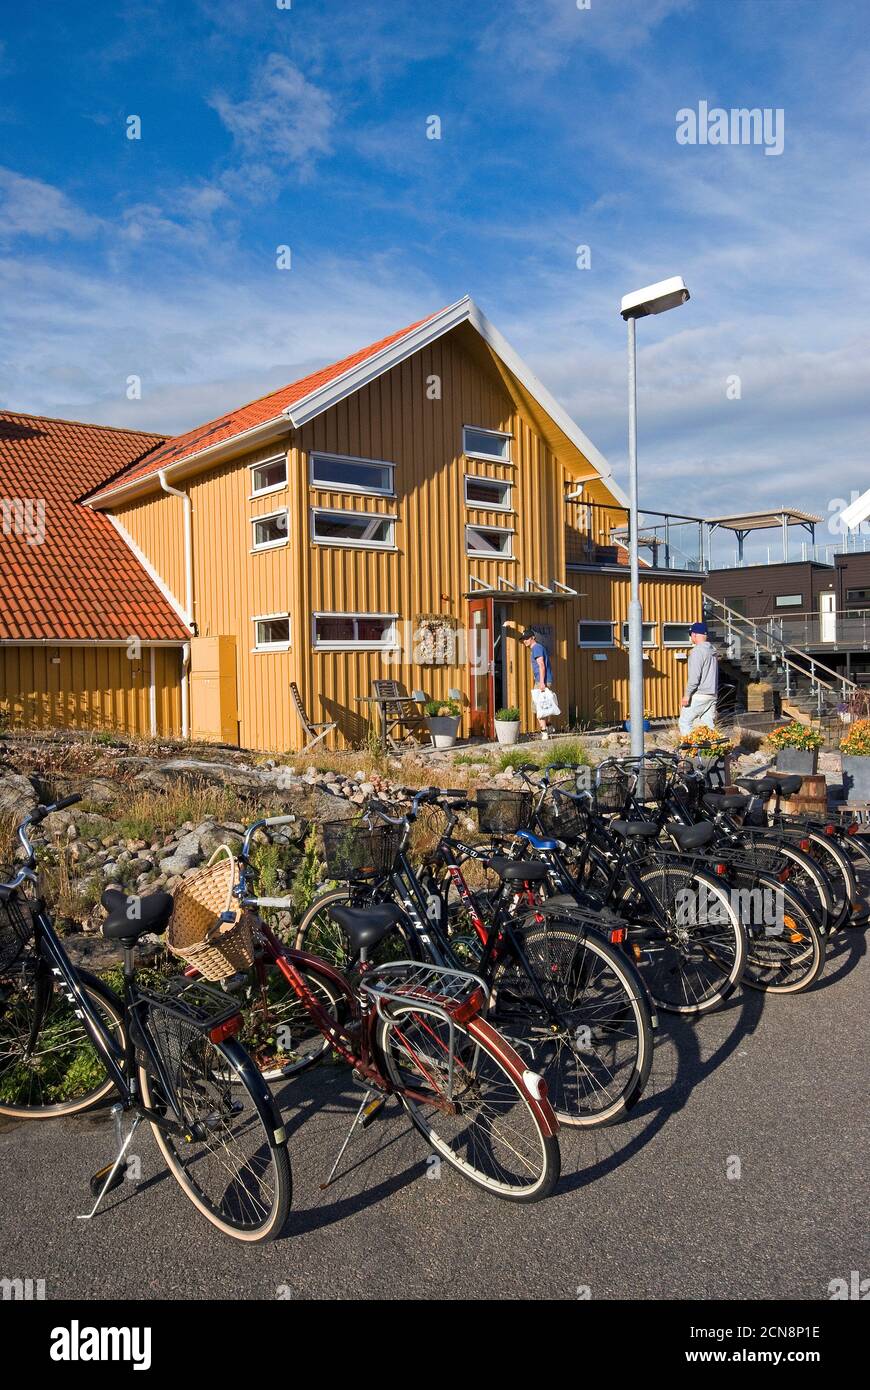 Parked bikes in Kladesholmen, Västra Götaland county, Sweden Stock Photo